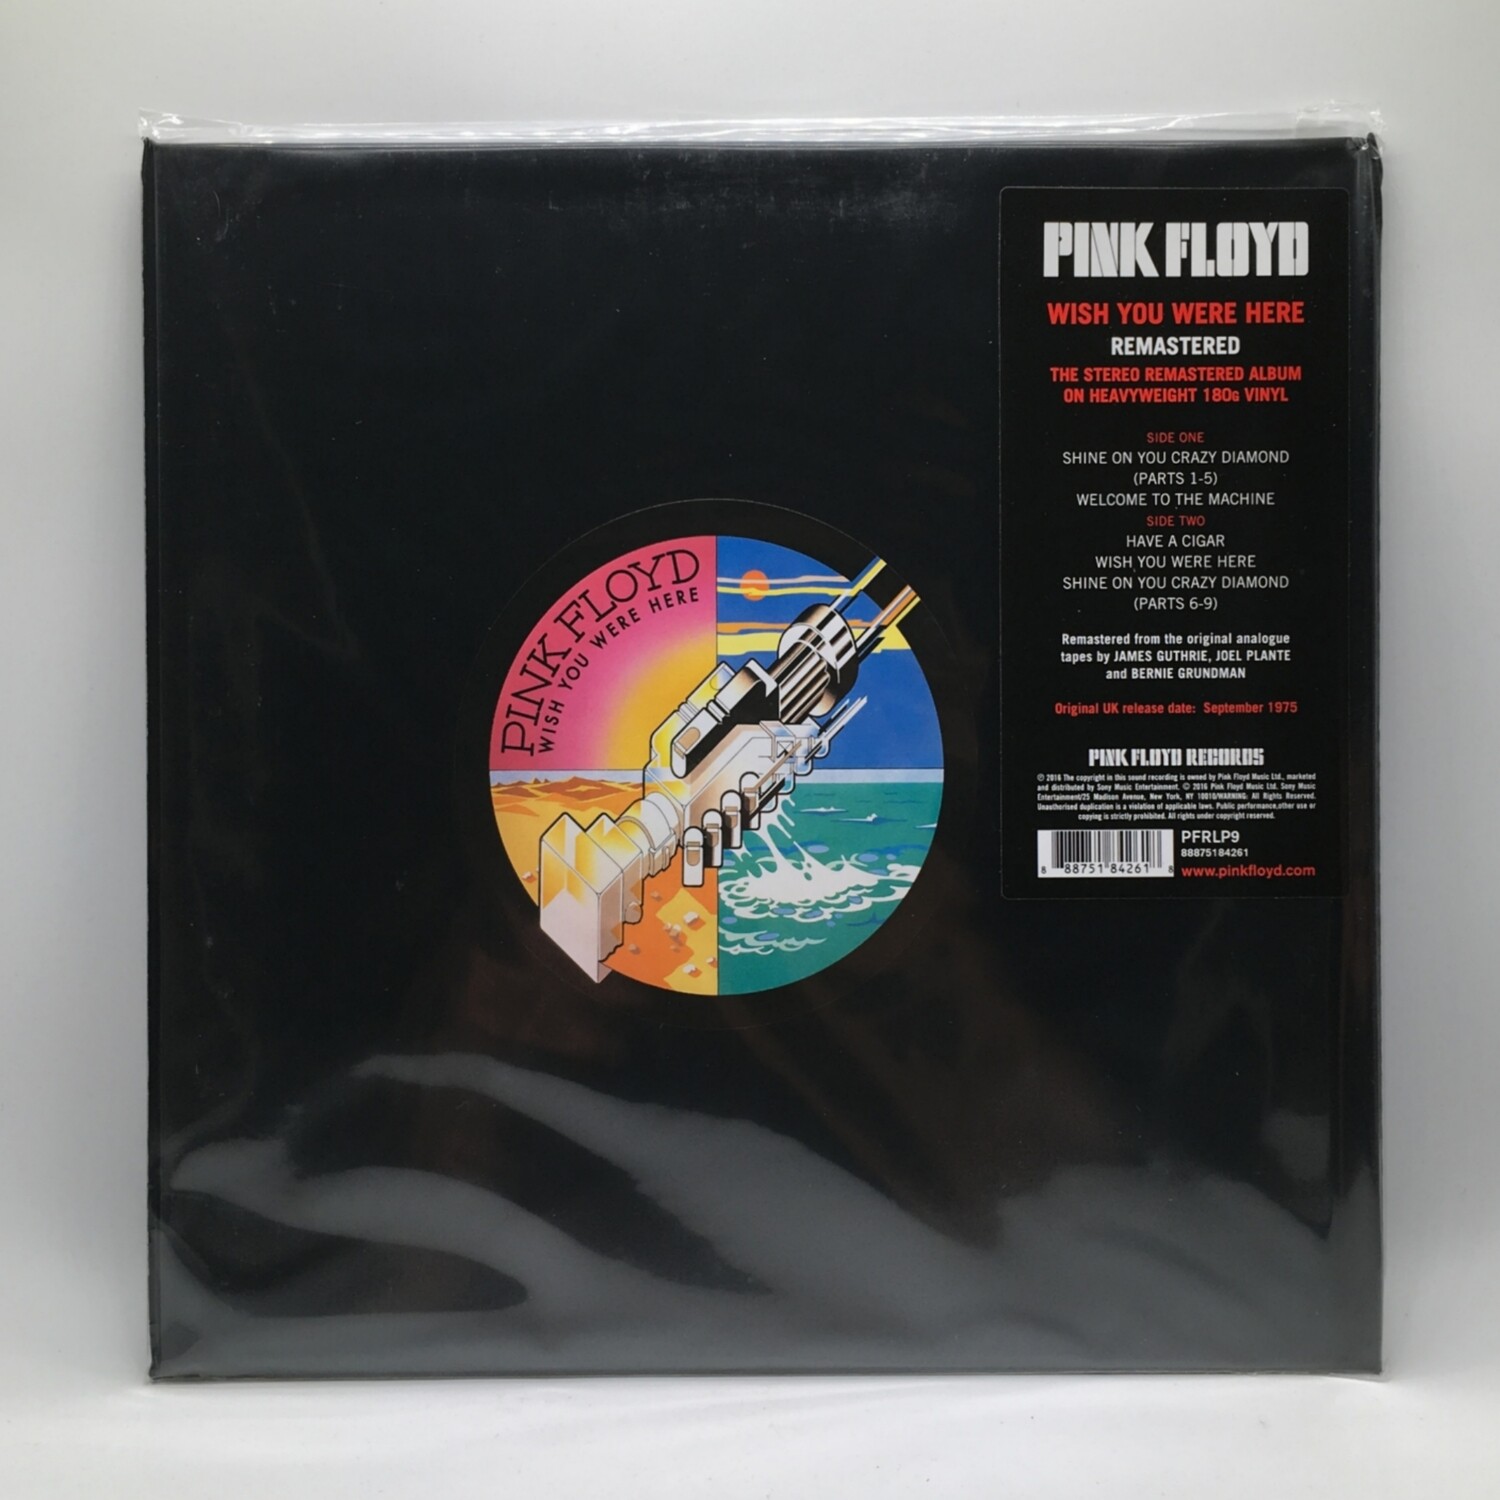 PINK FLOYD -WISH YOU WERE HERE- LP (180 GRAM VINYL)